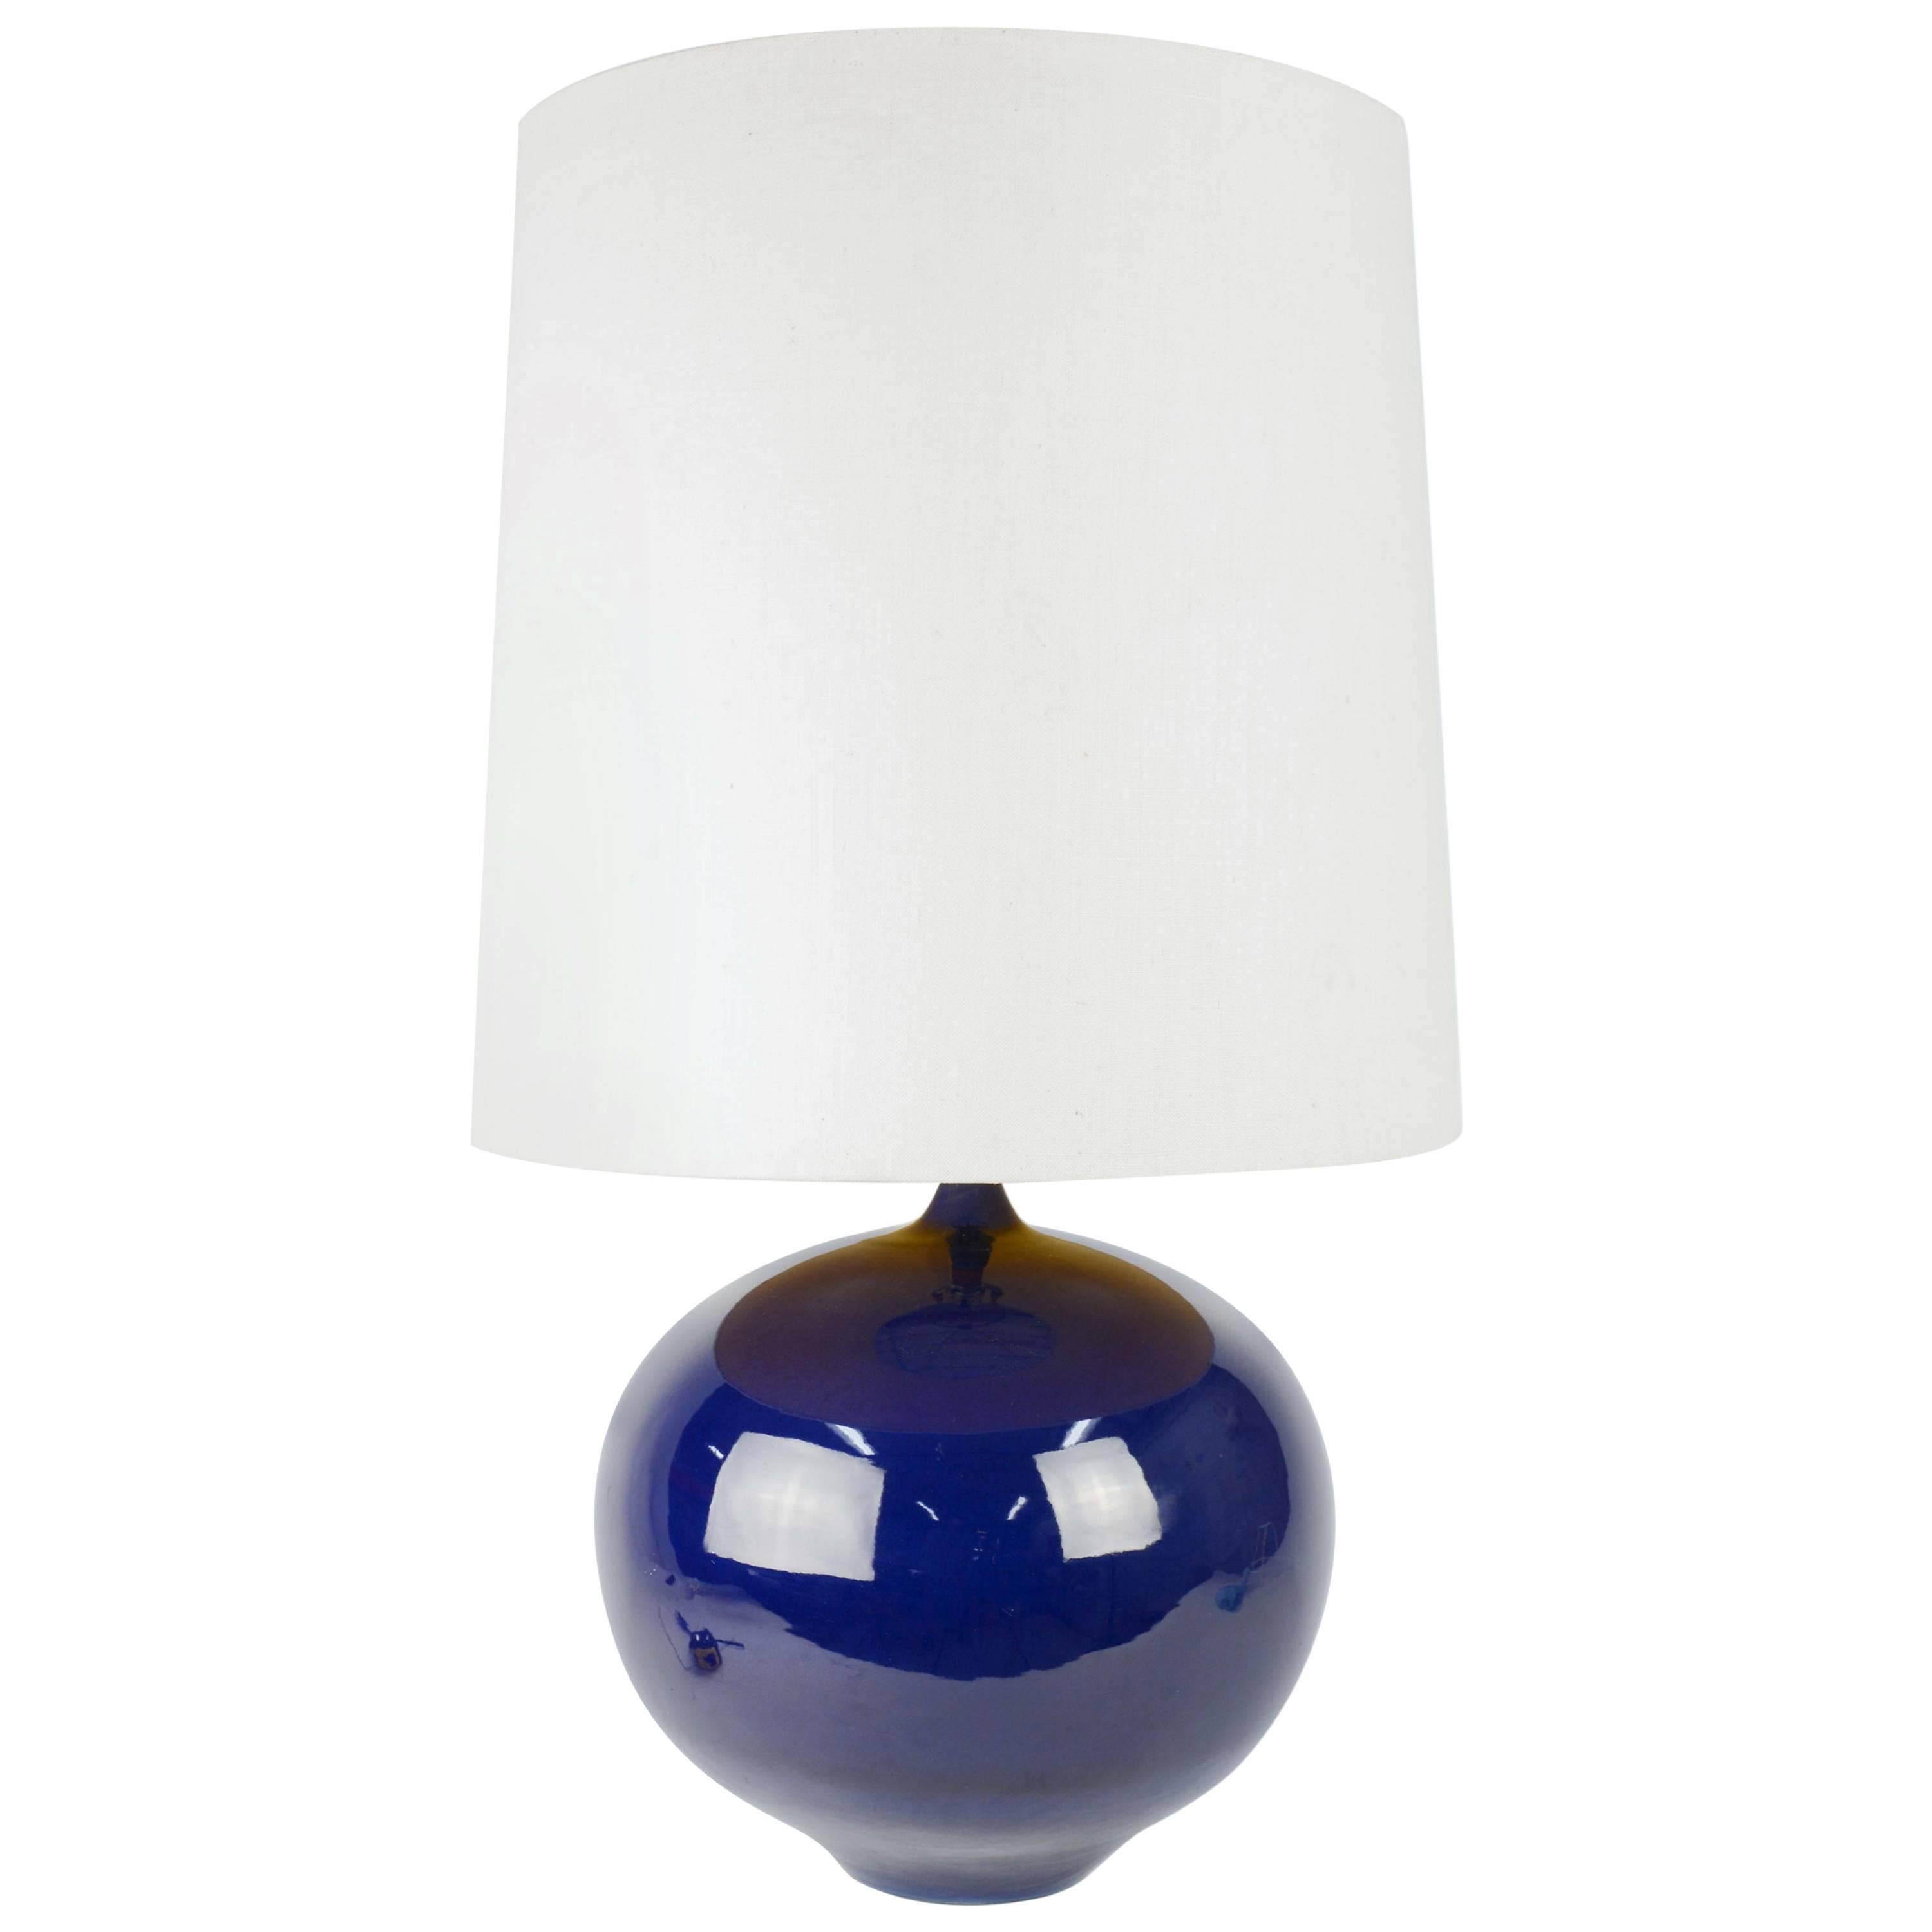 Big Blue Ceramic Table Lamp with Teak Stem For Sale